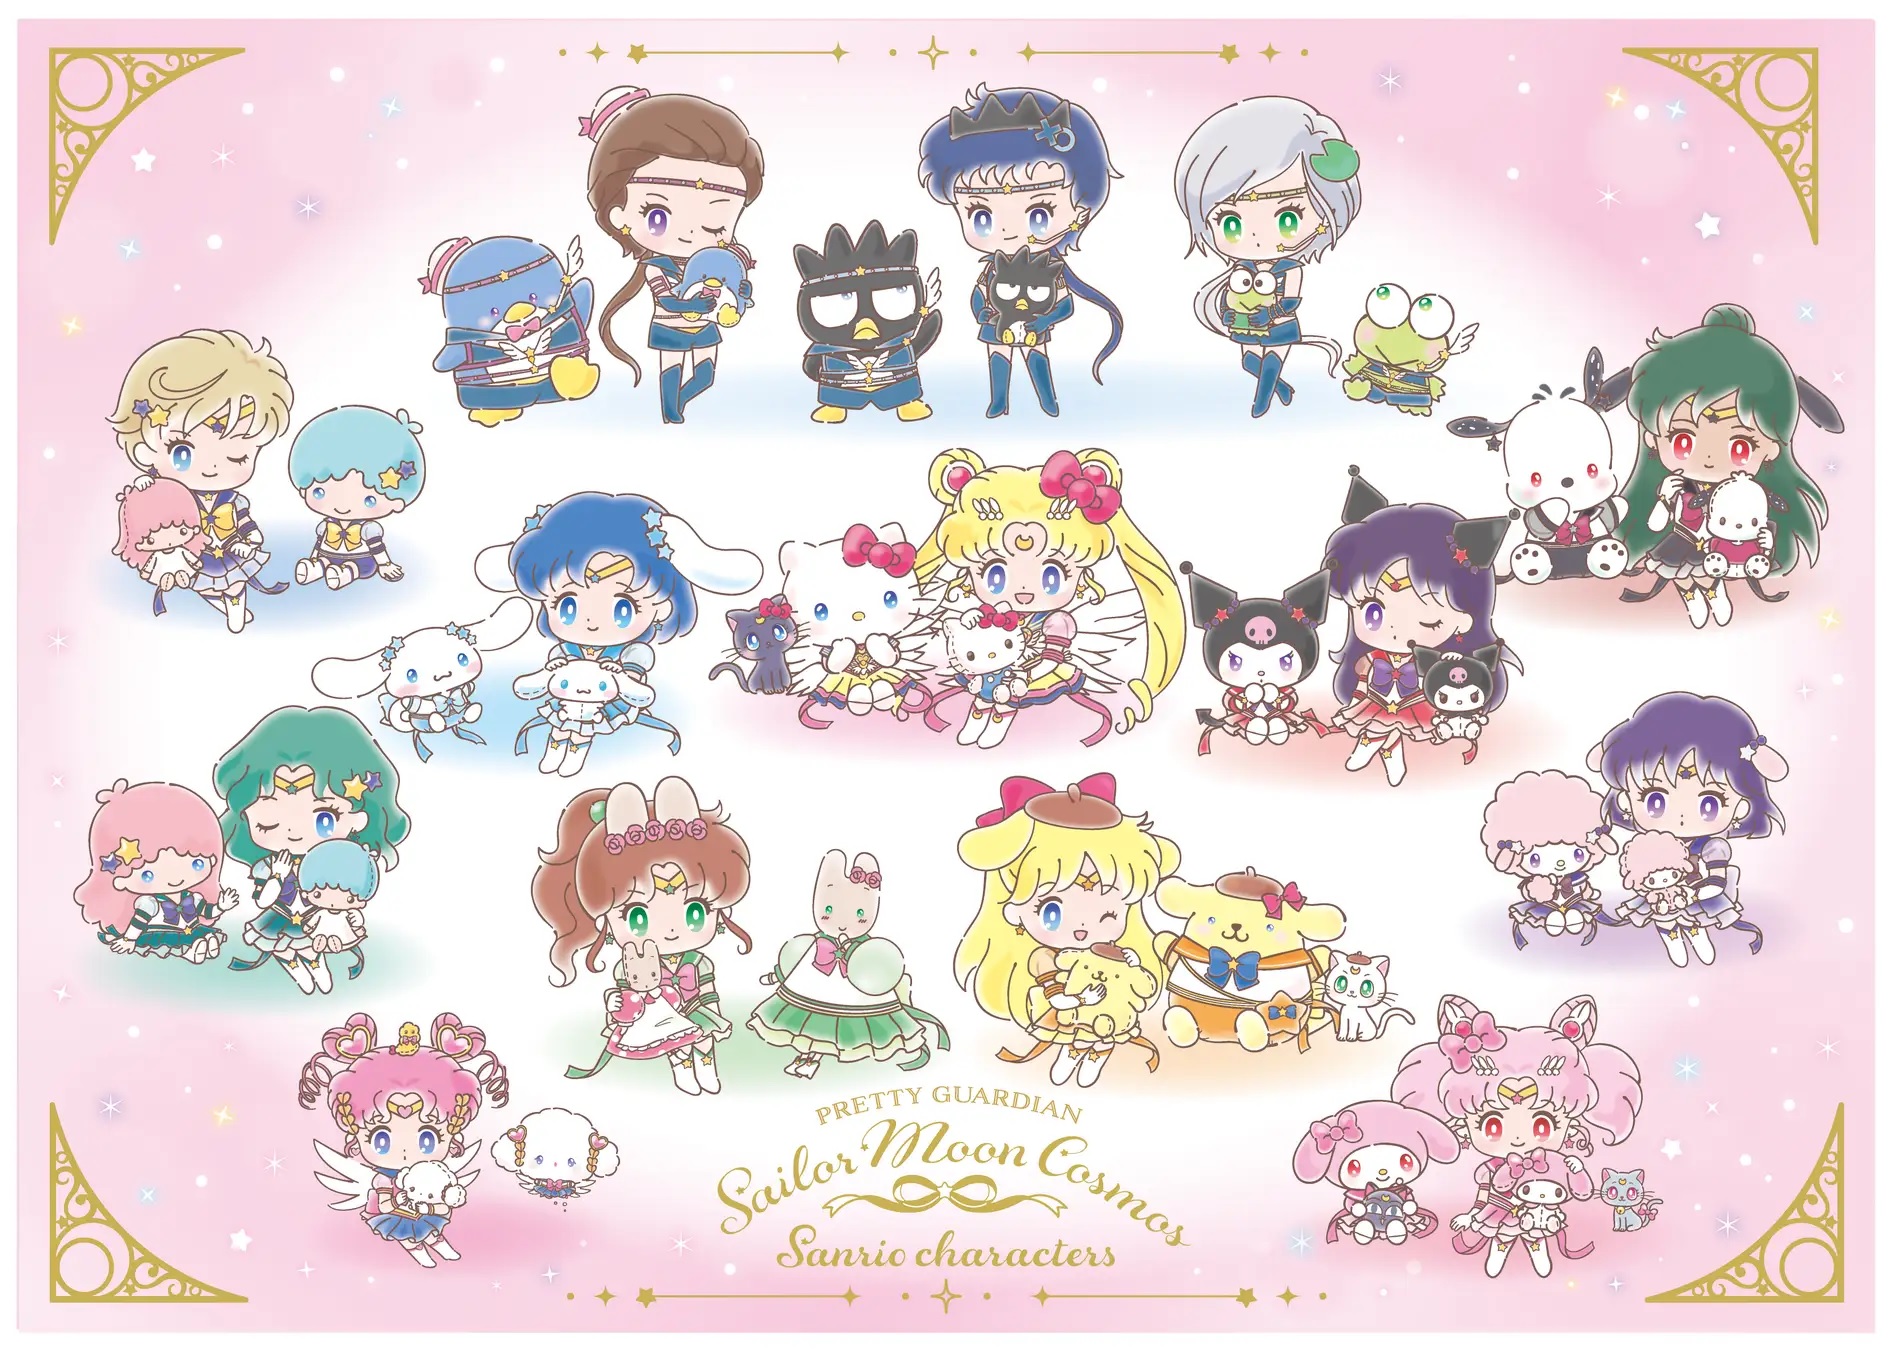 Every Sailor Moon Anime (In Chronological Order)